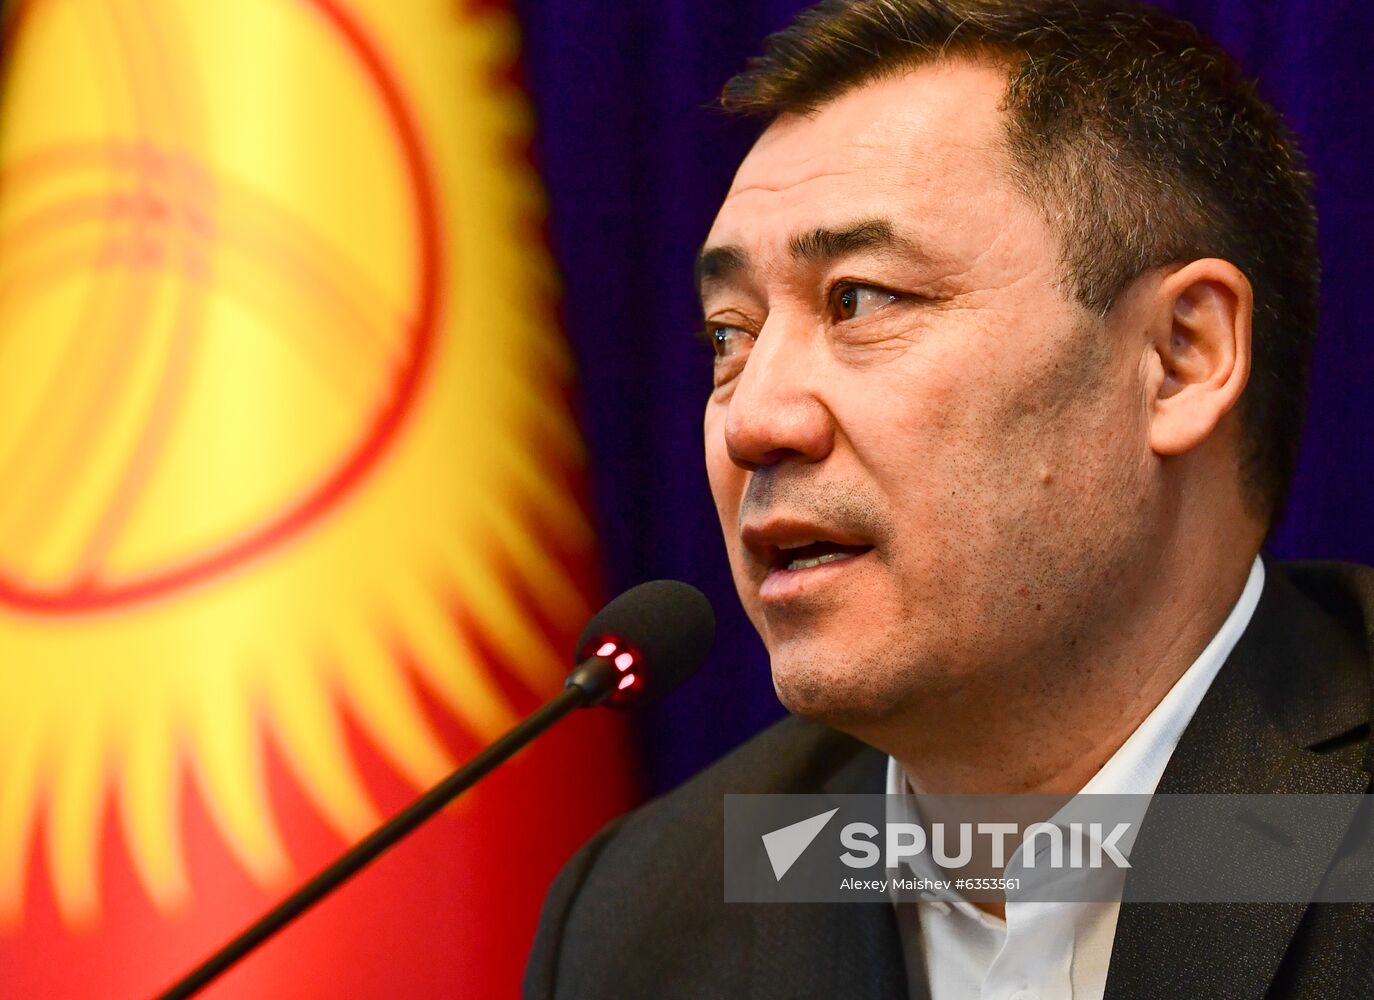 Kyrgyzstan State Of Emergency